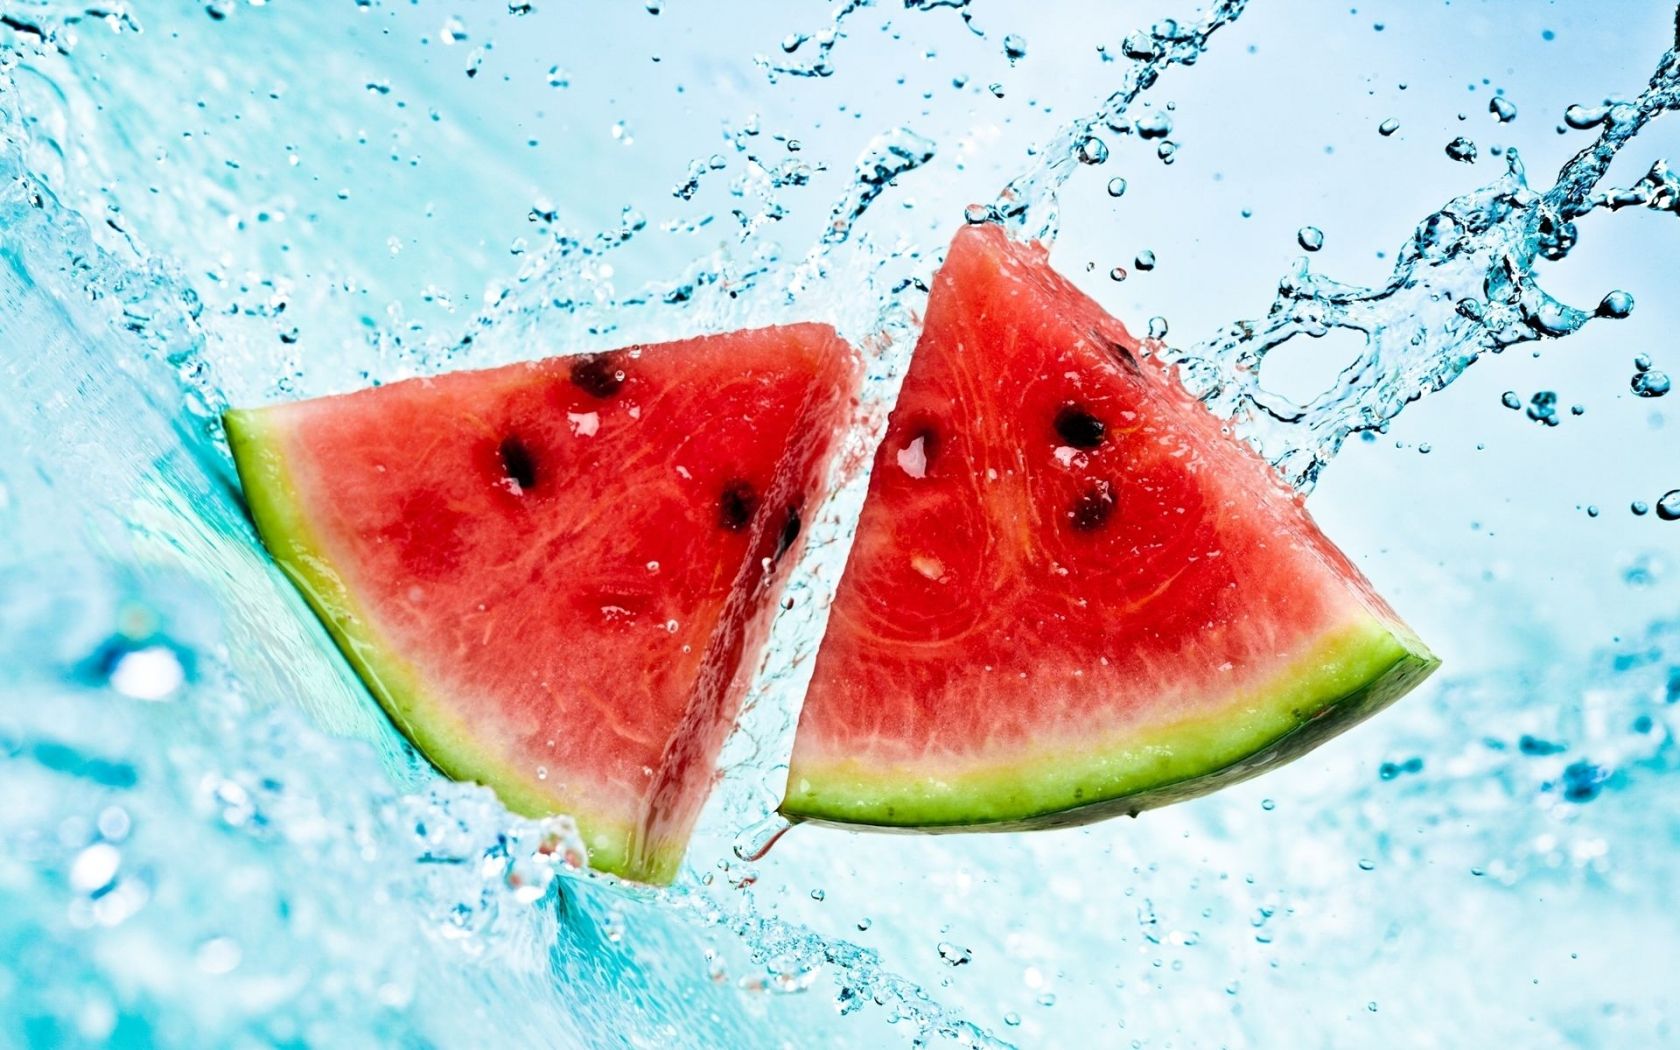 Free download Watermelon Wallpaper Watermelon Wallpaper 1920x1200